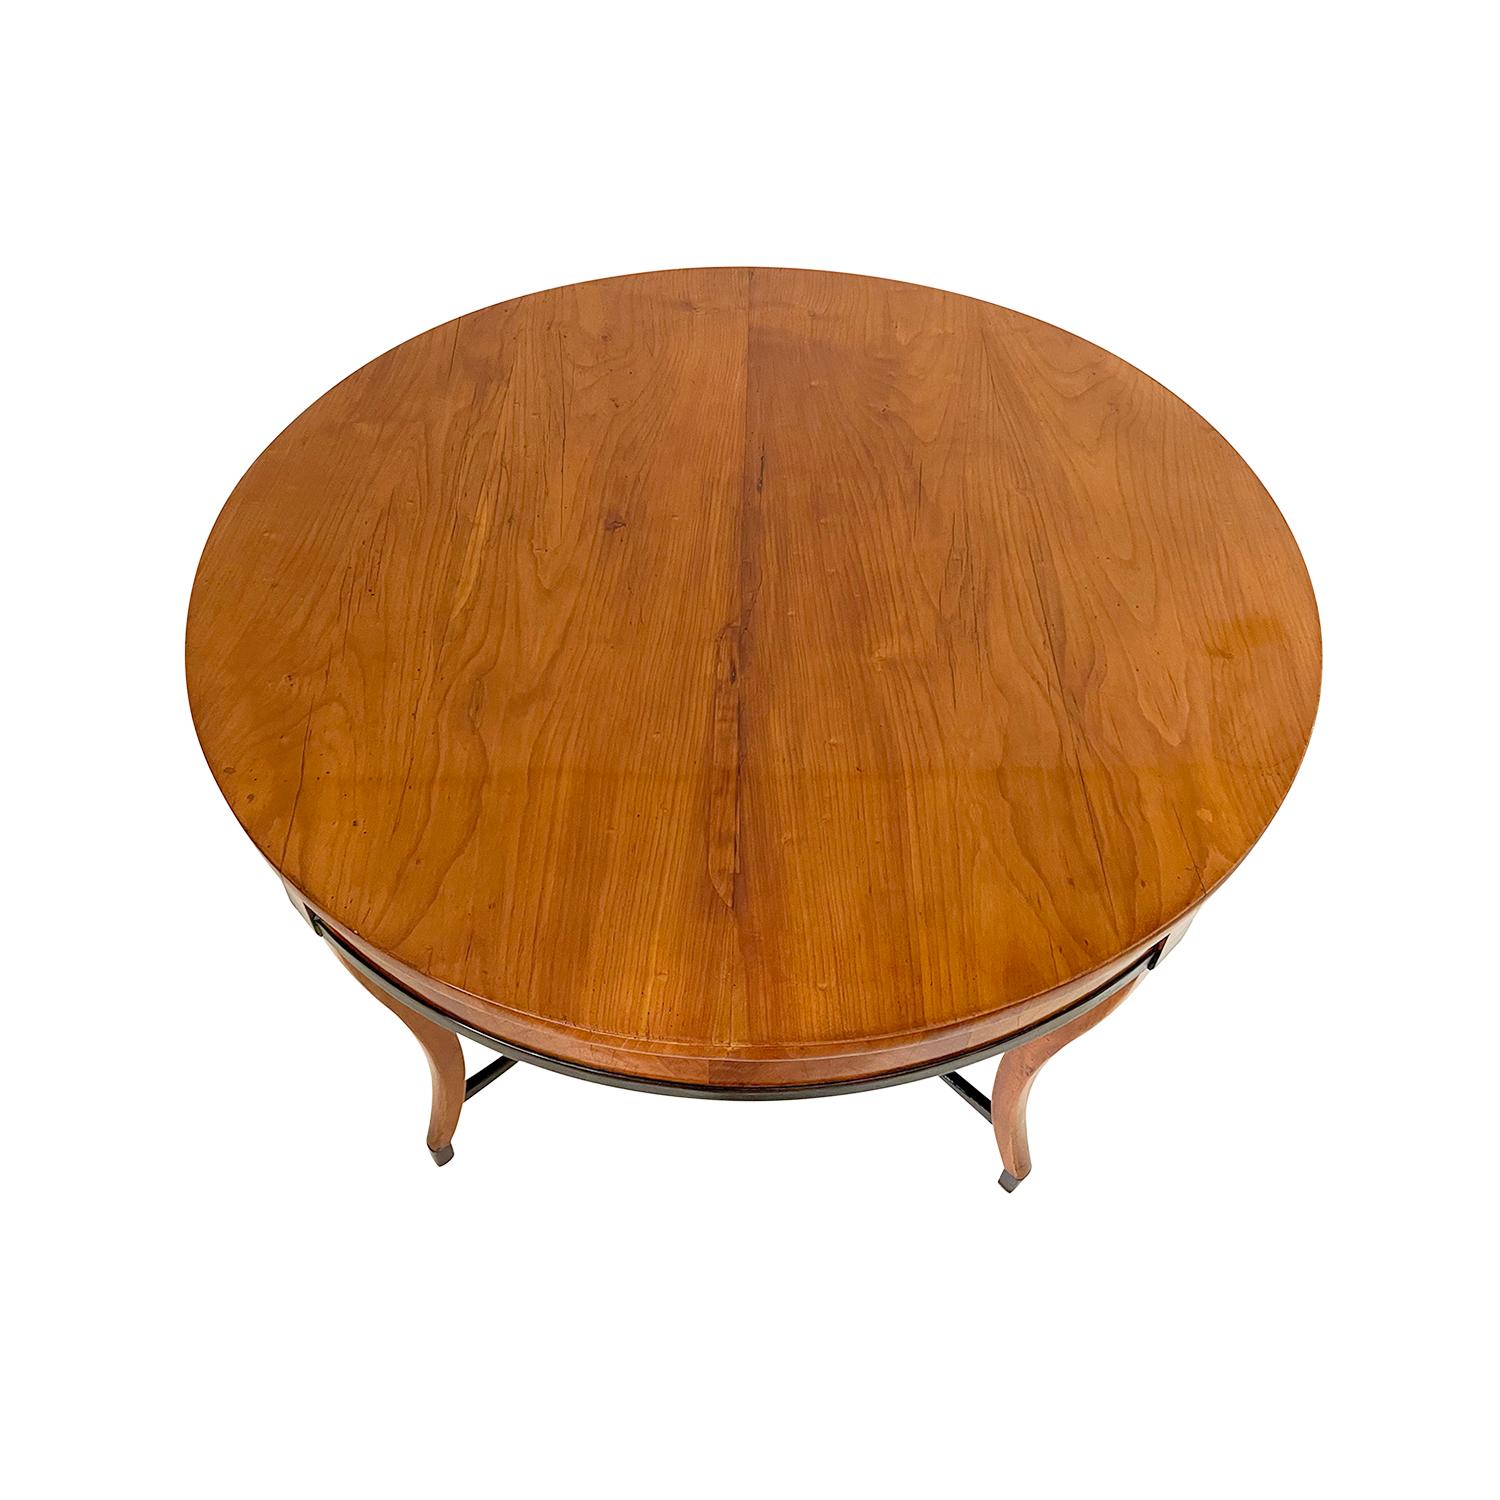 19th Century German Biedermeier Antique Round Cherrywood Dining Room Table For Sale 3